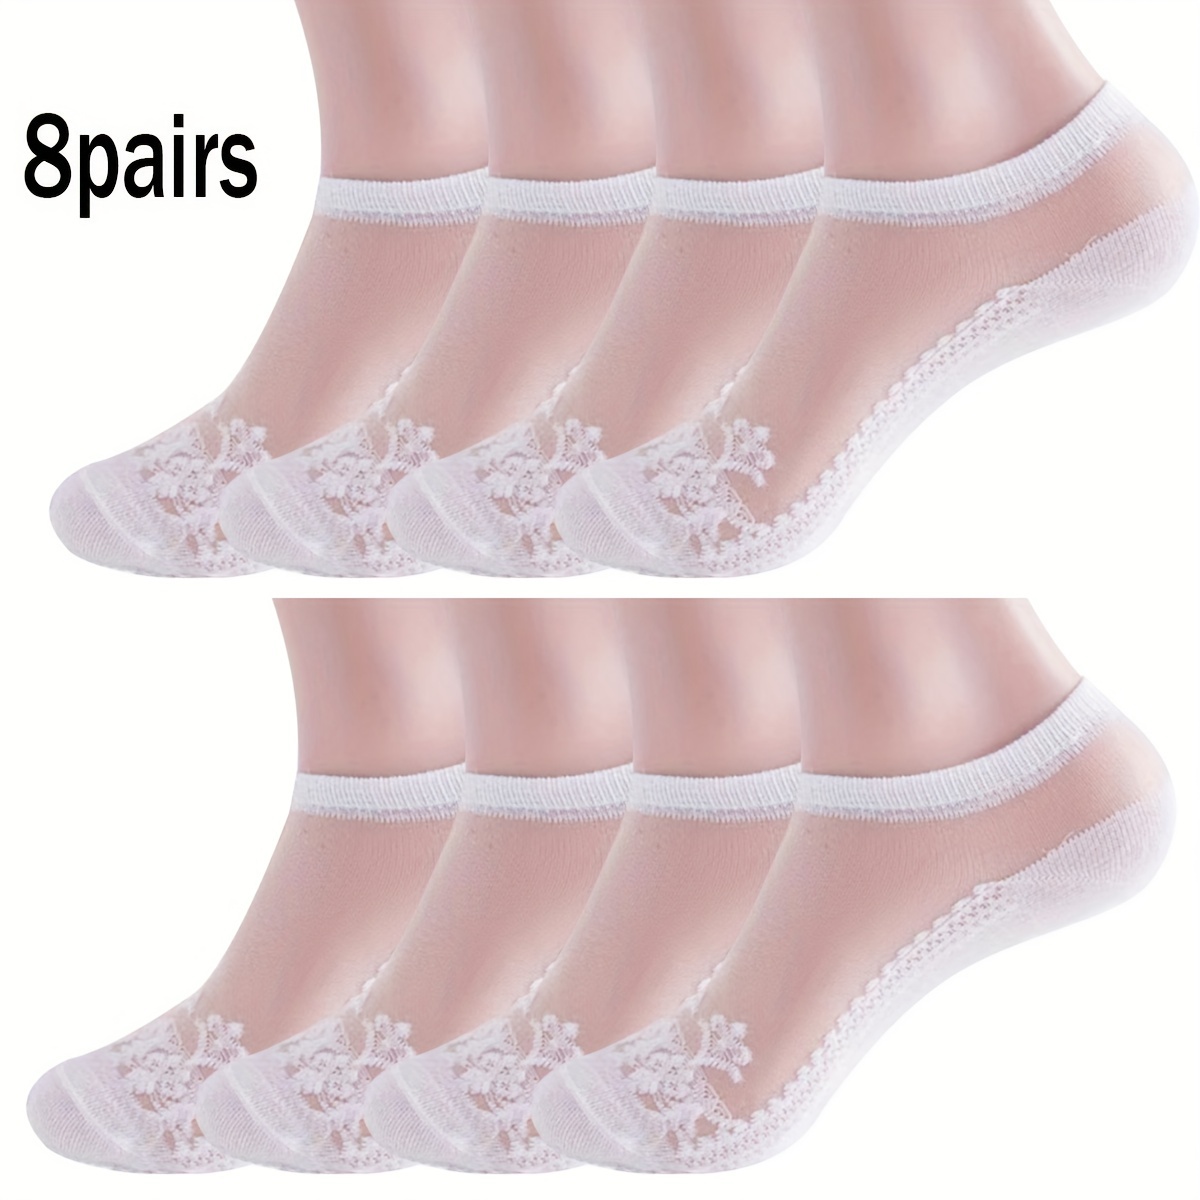 

8 Pairs Thin Breathable Transparent Vintage Floral Lace No-show Socks, Ankle Short Socks, Soft Comfortable, Fashionable Versatile Style